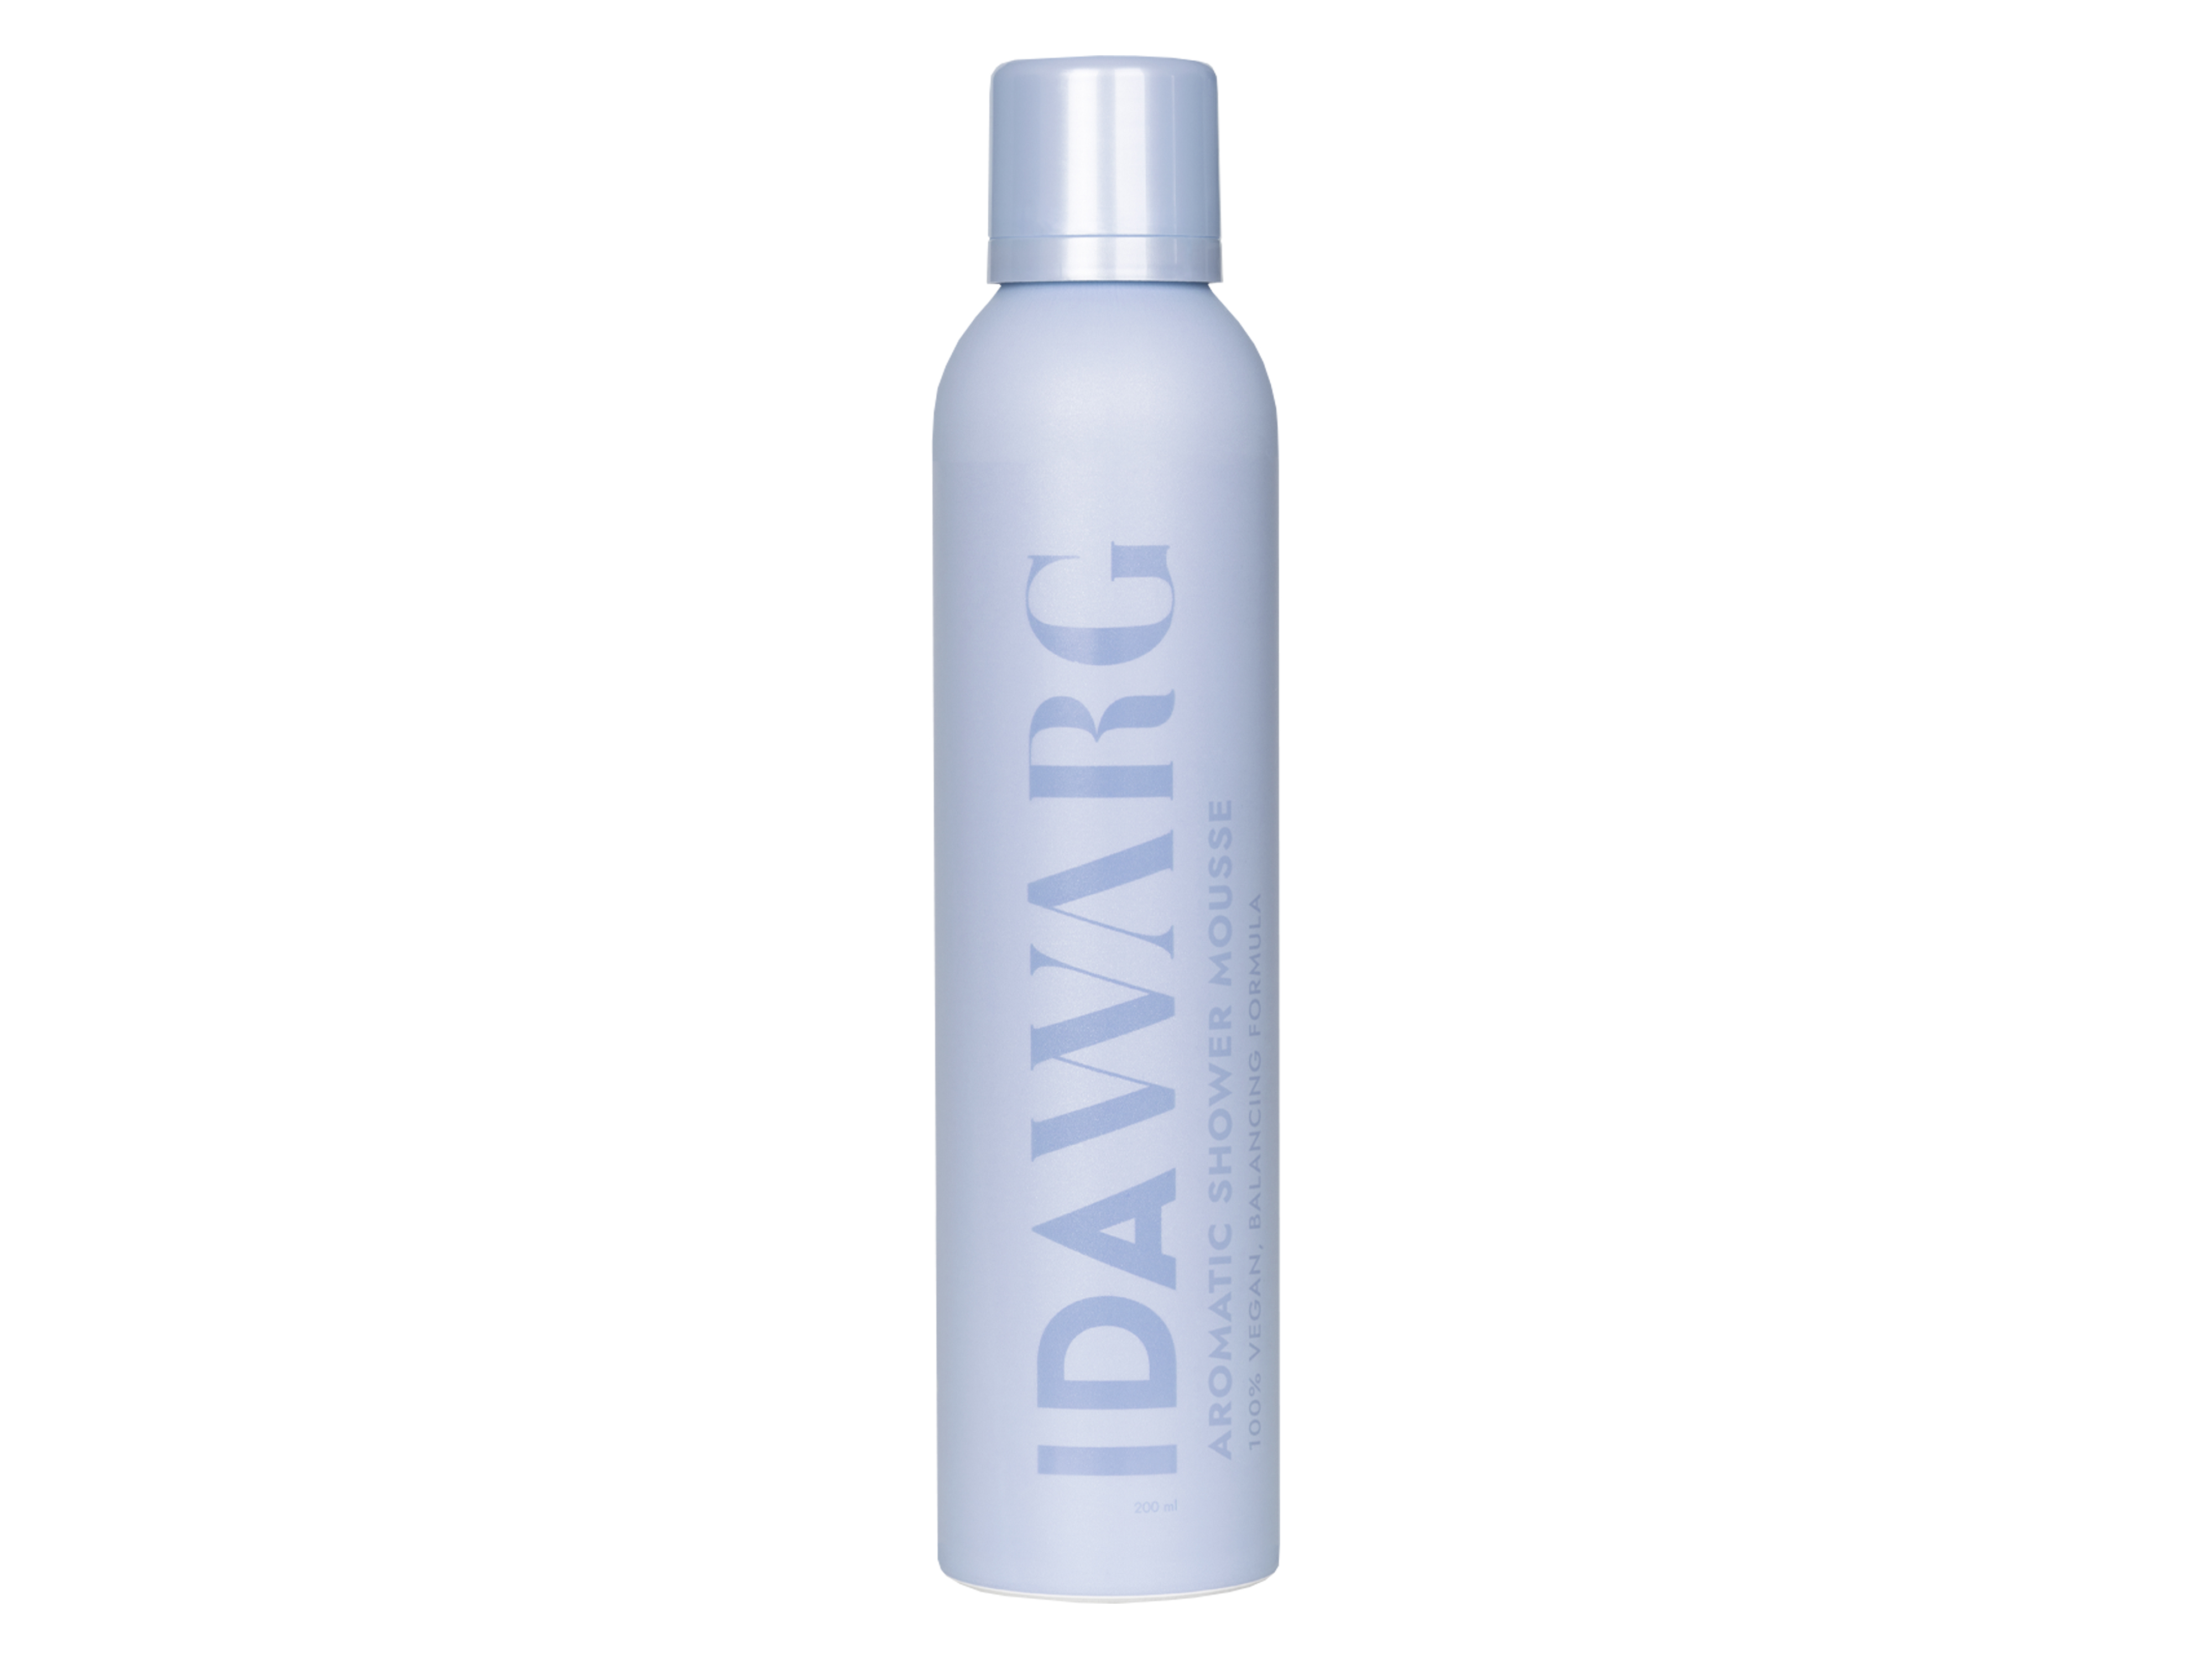 Ida Warg Beauty Aromatic Shower Mousse, 200 ml